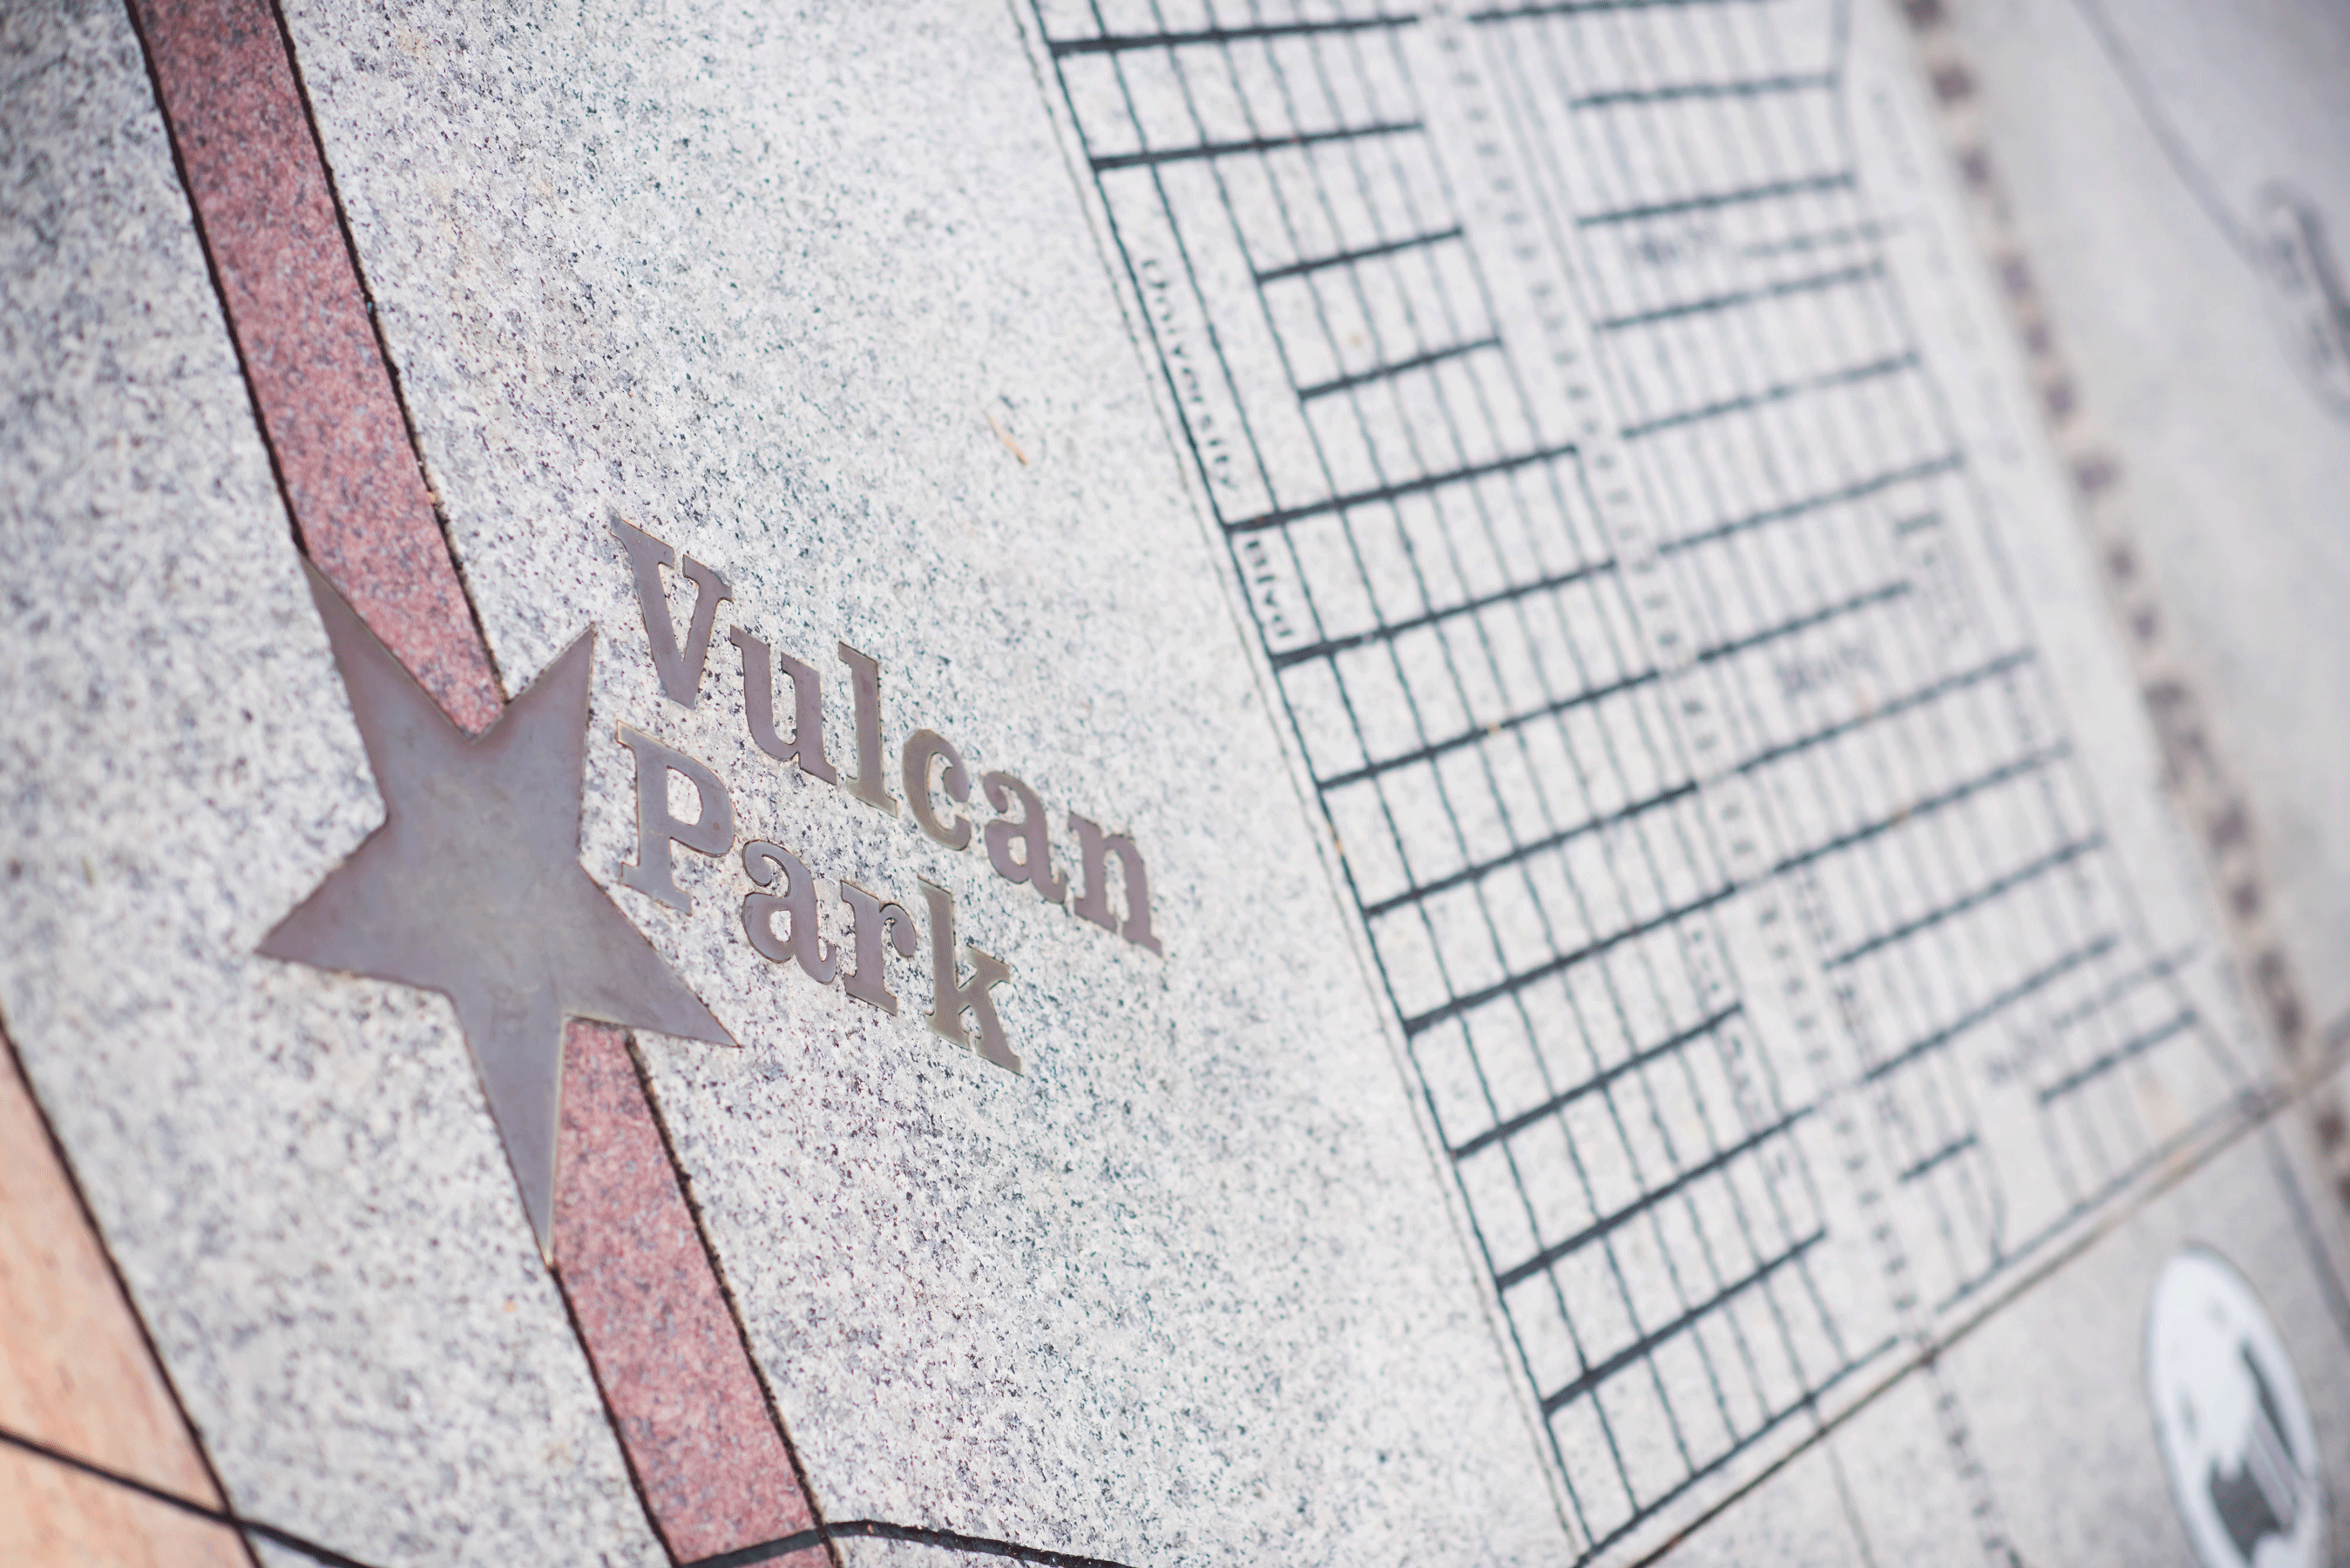 Vulcan Plaza